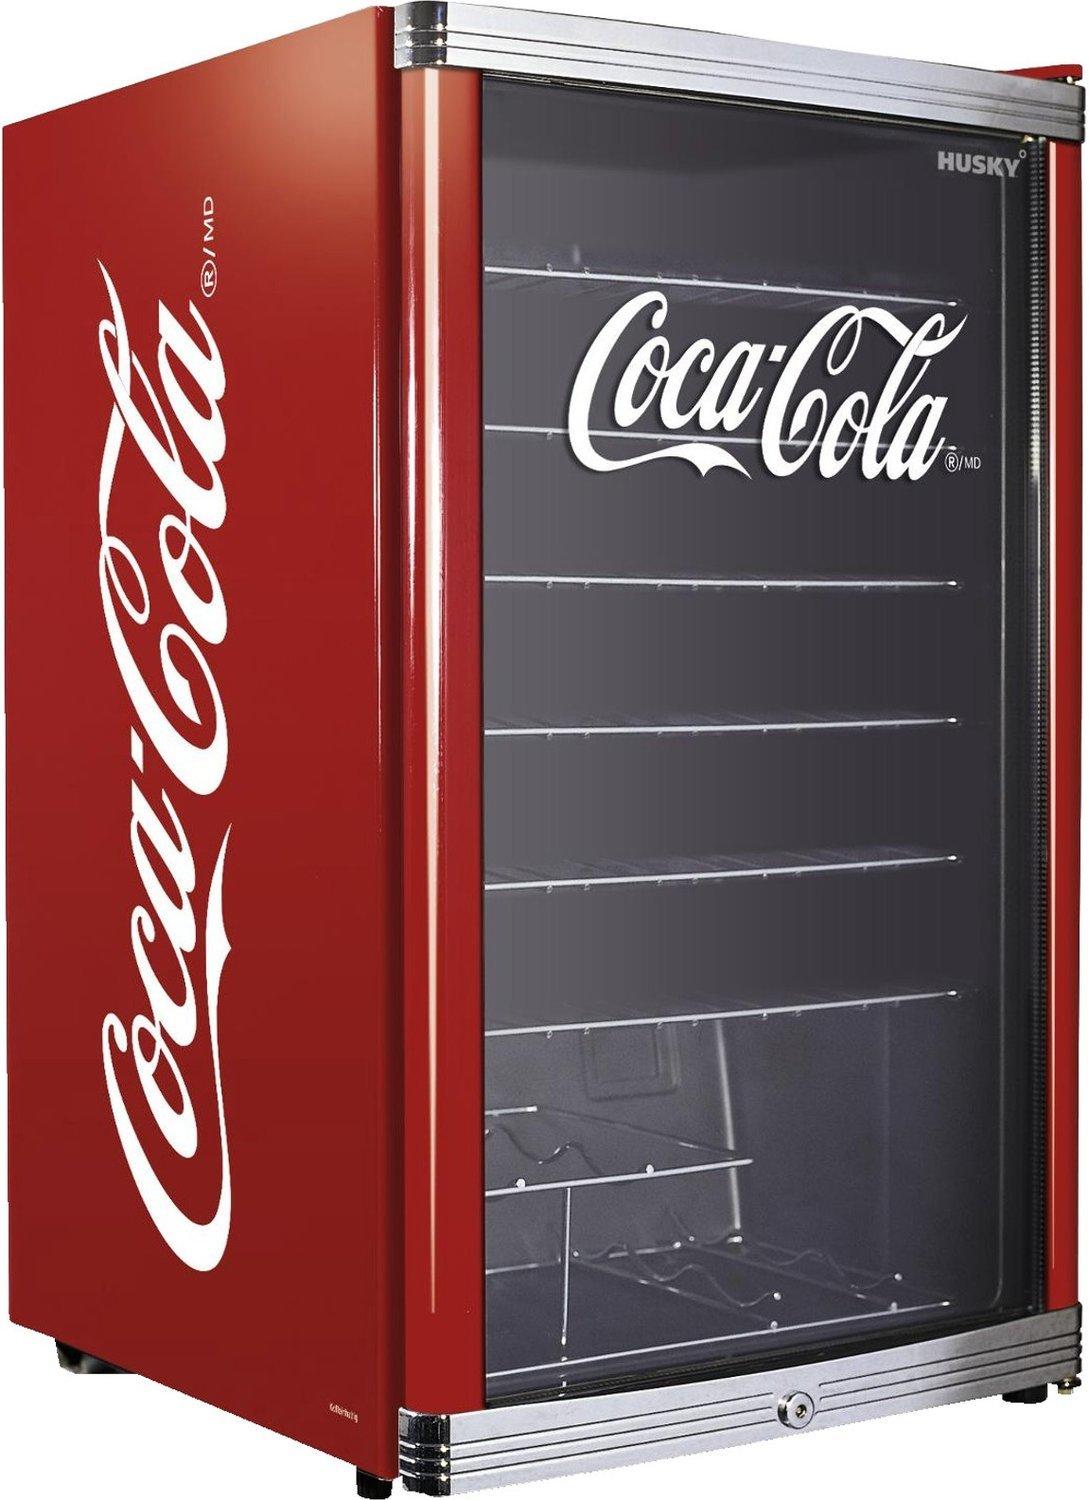 Husky Kühlschrank HighCube Coca-Cola 115 l Erfahrungen 4/5 Sternen